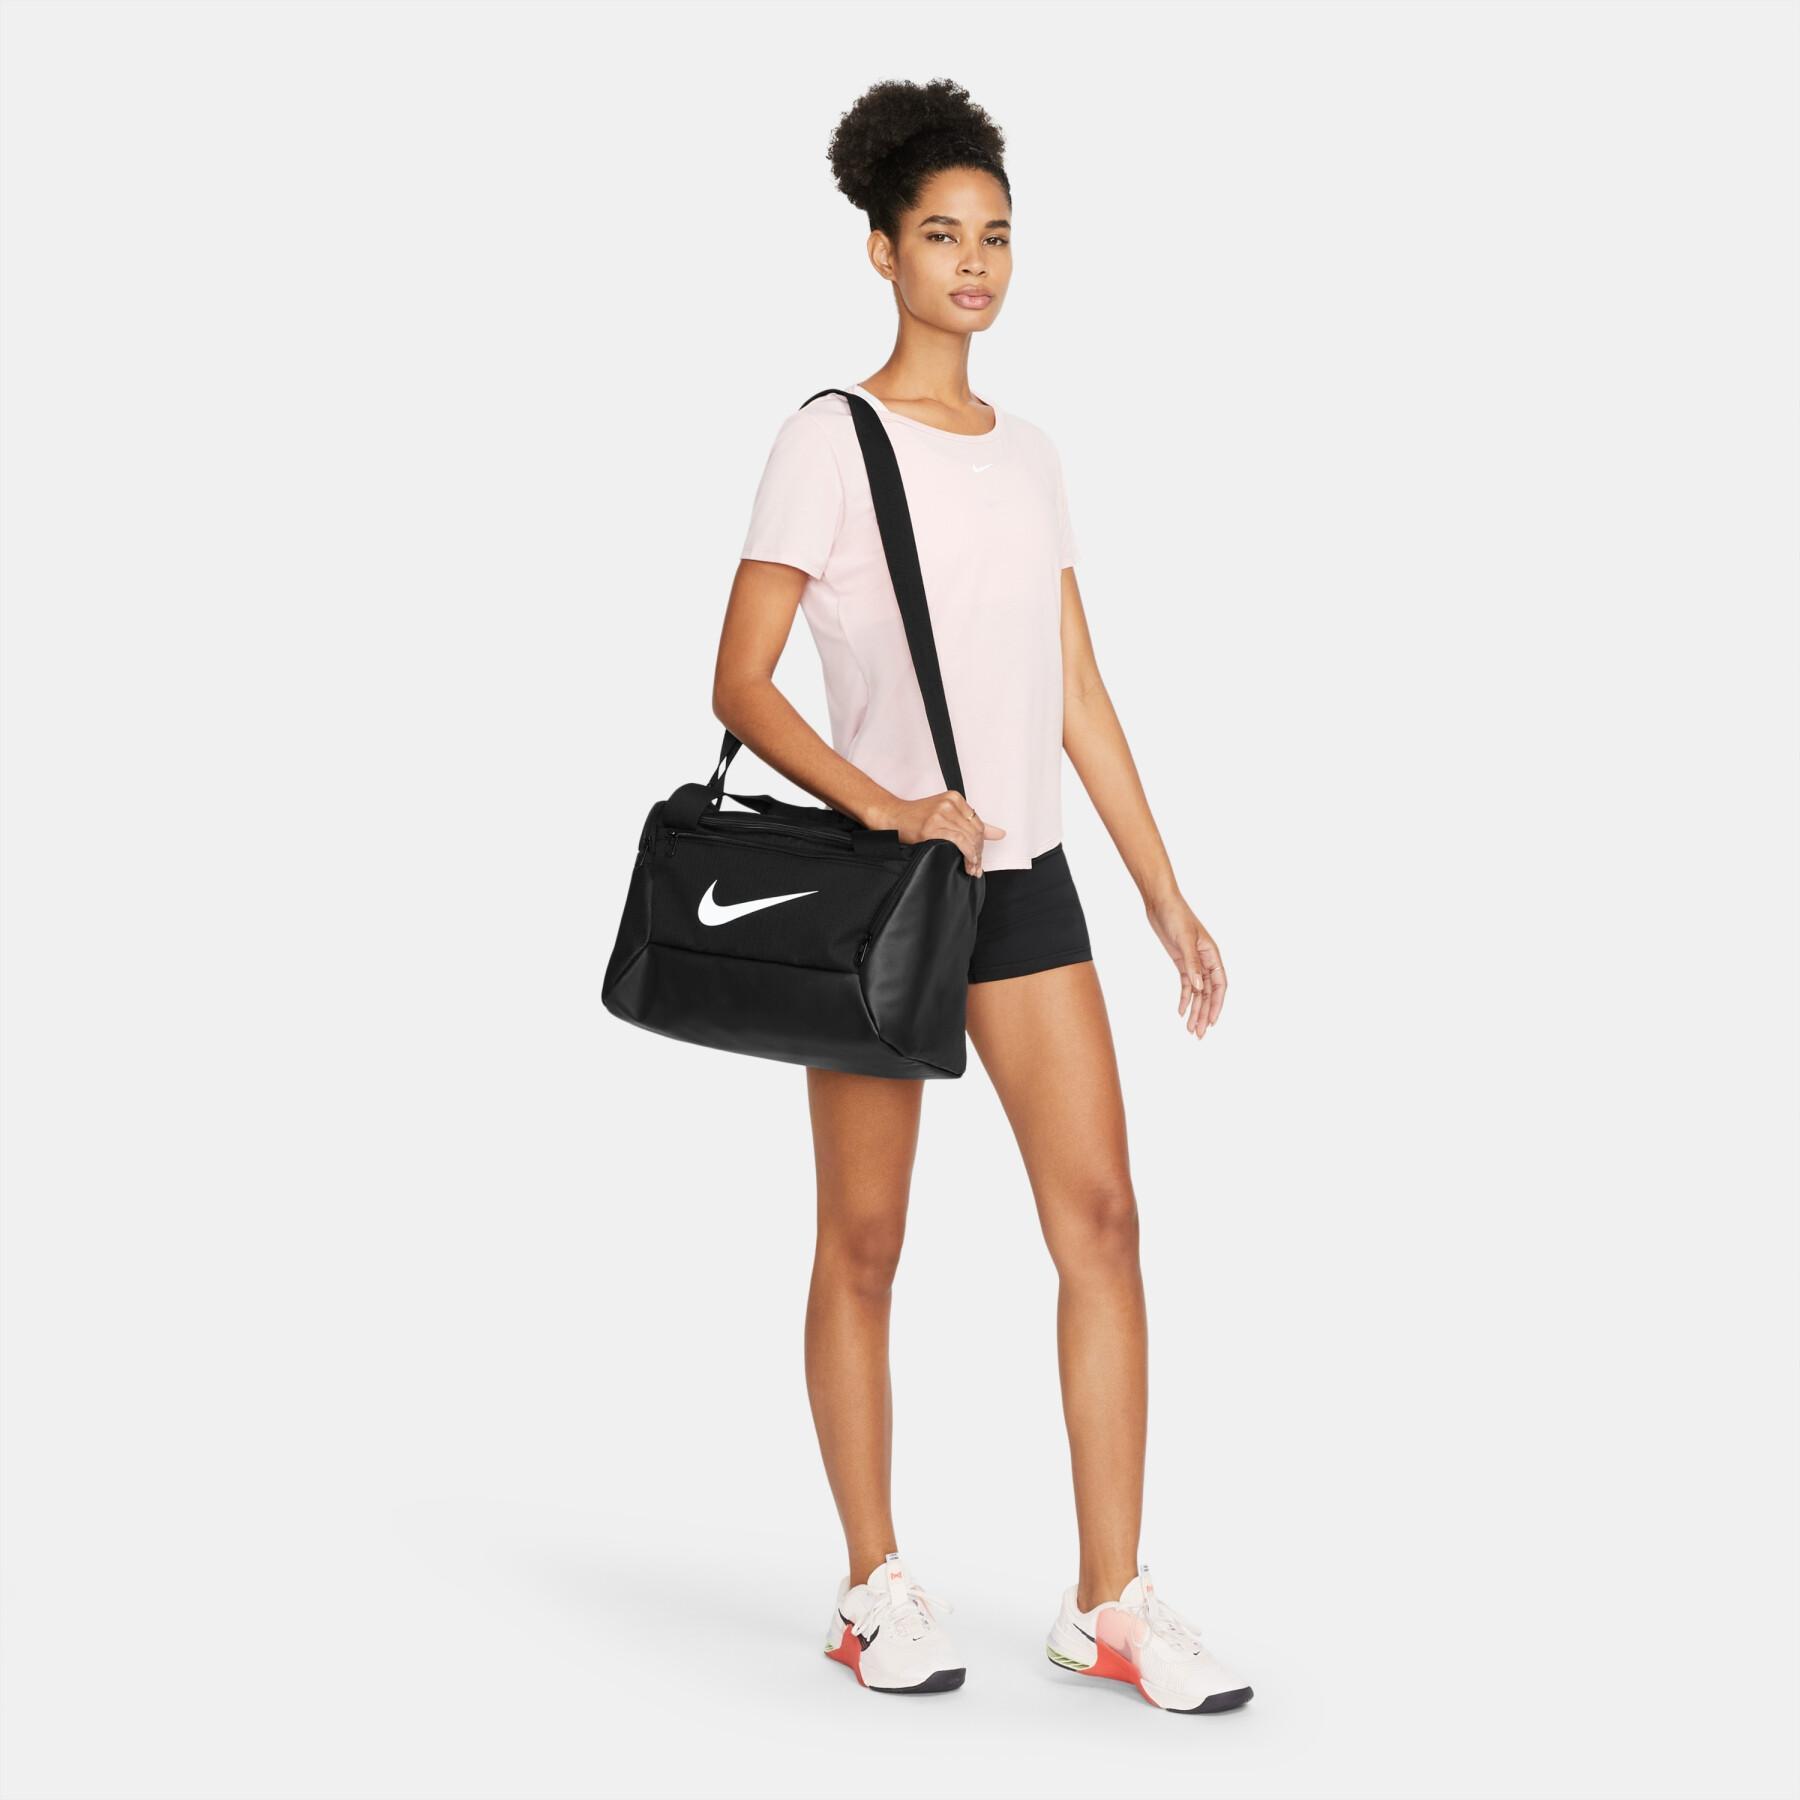 Sports bag Nike Brasilia 9.5 - Sports bag - Luggage - Equipment